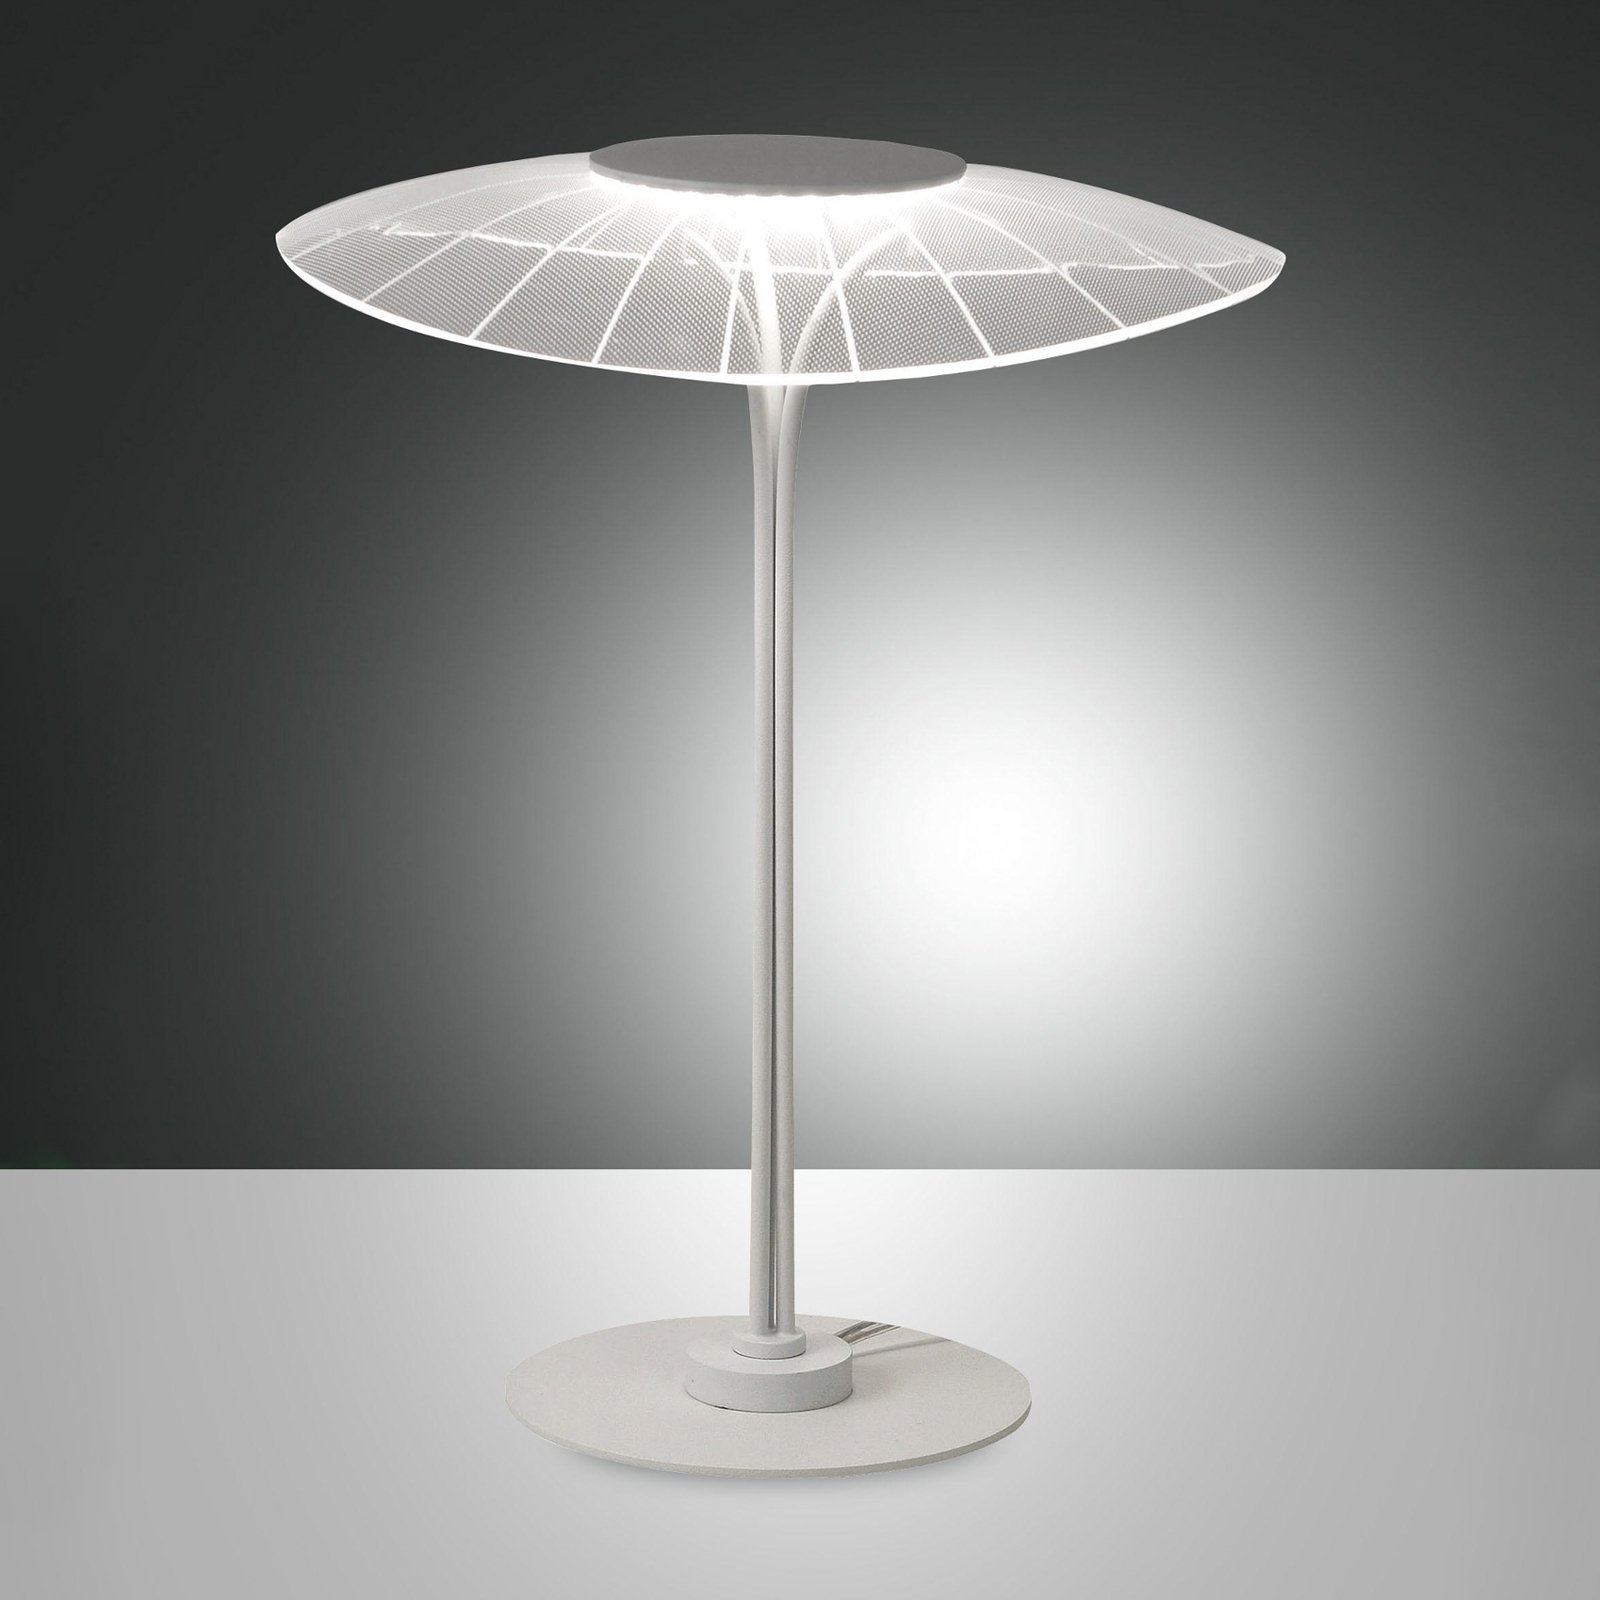 LED-Tischleuchte Vela, weiß/transparent, 36cm, Acryl, Dimmer